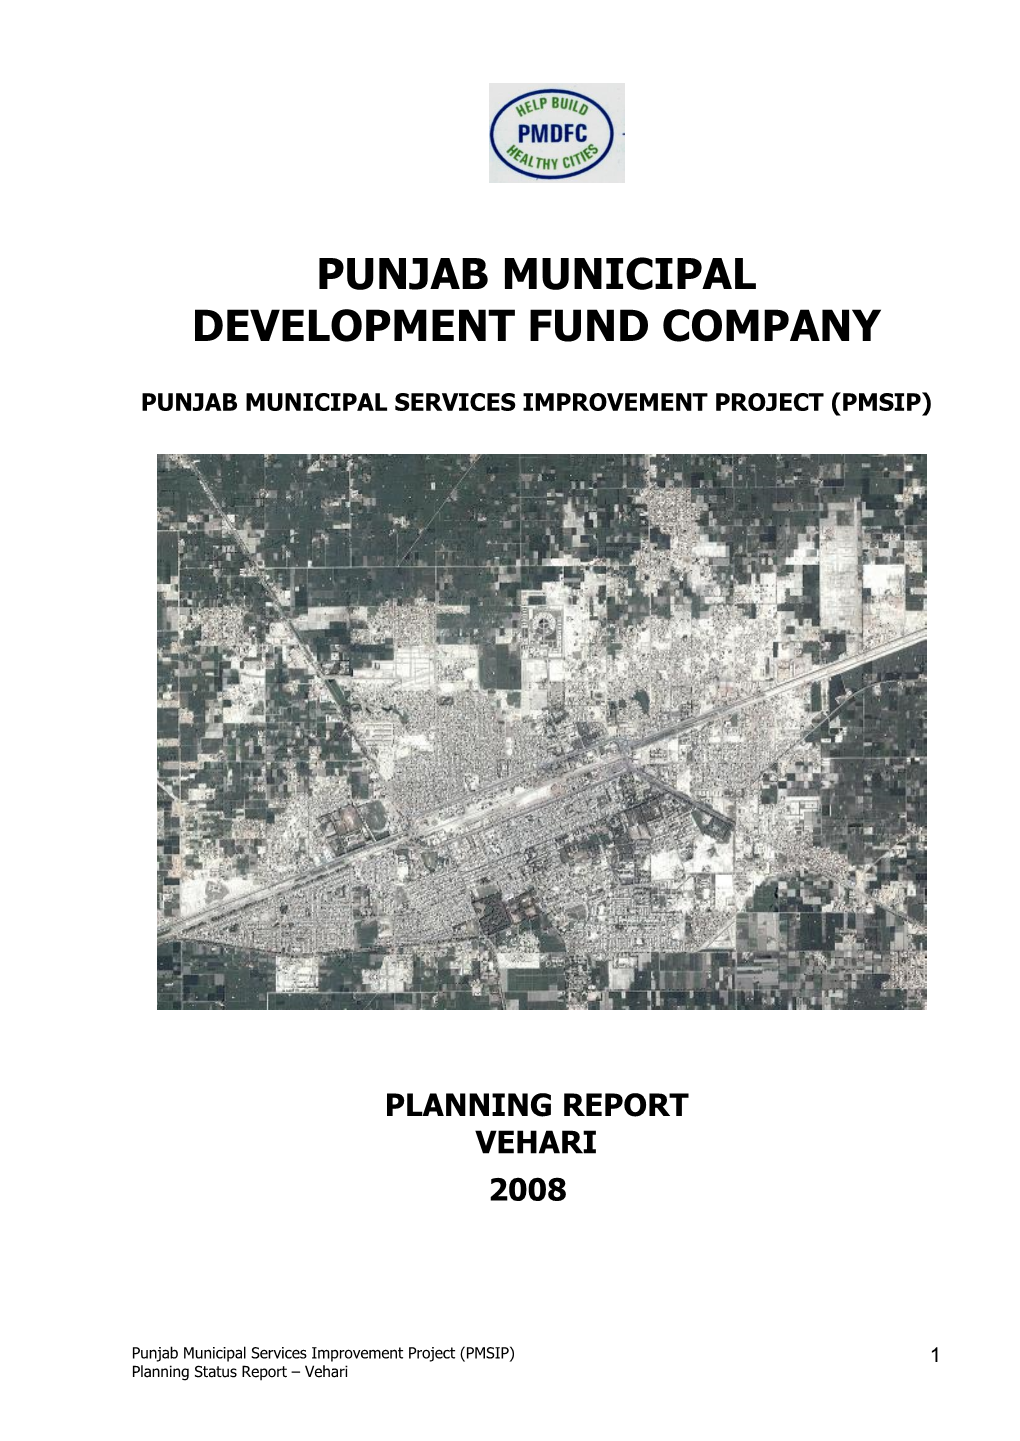 Planning Report Vehari 2008